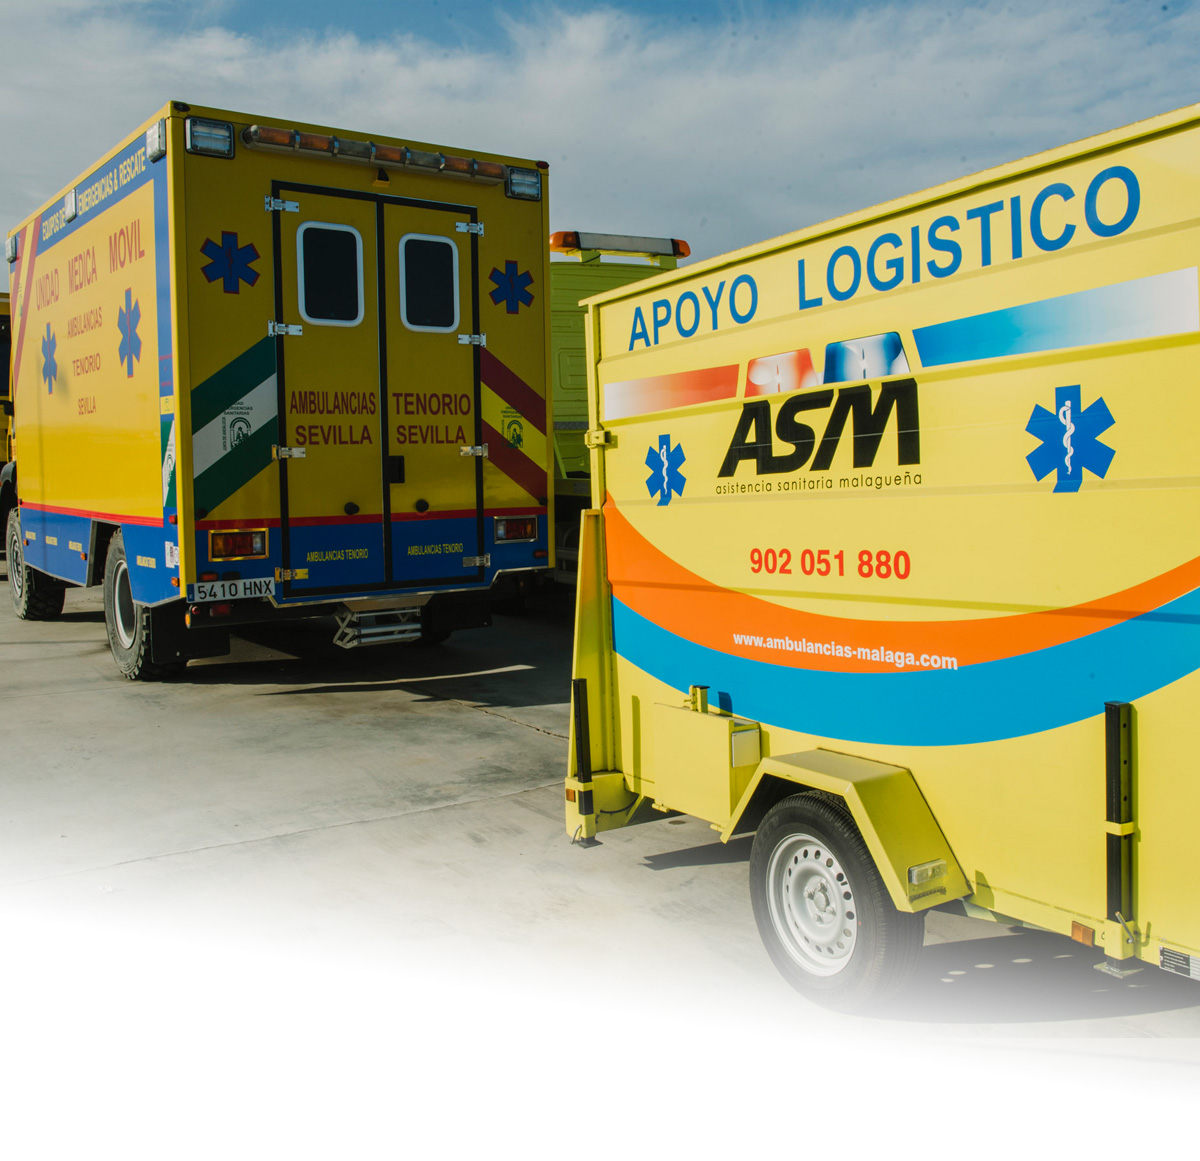 https://ambulancias-malaga.es/wp-content/uploads/2020/04/apoyo-logistico.jpg